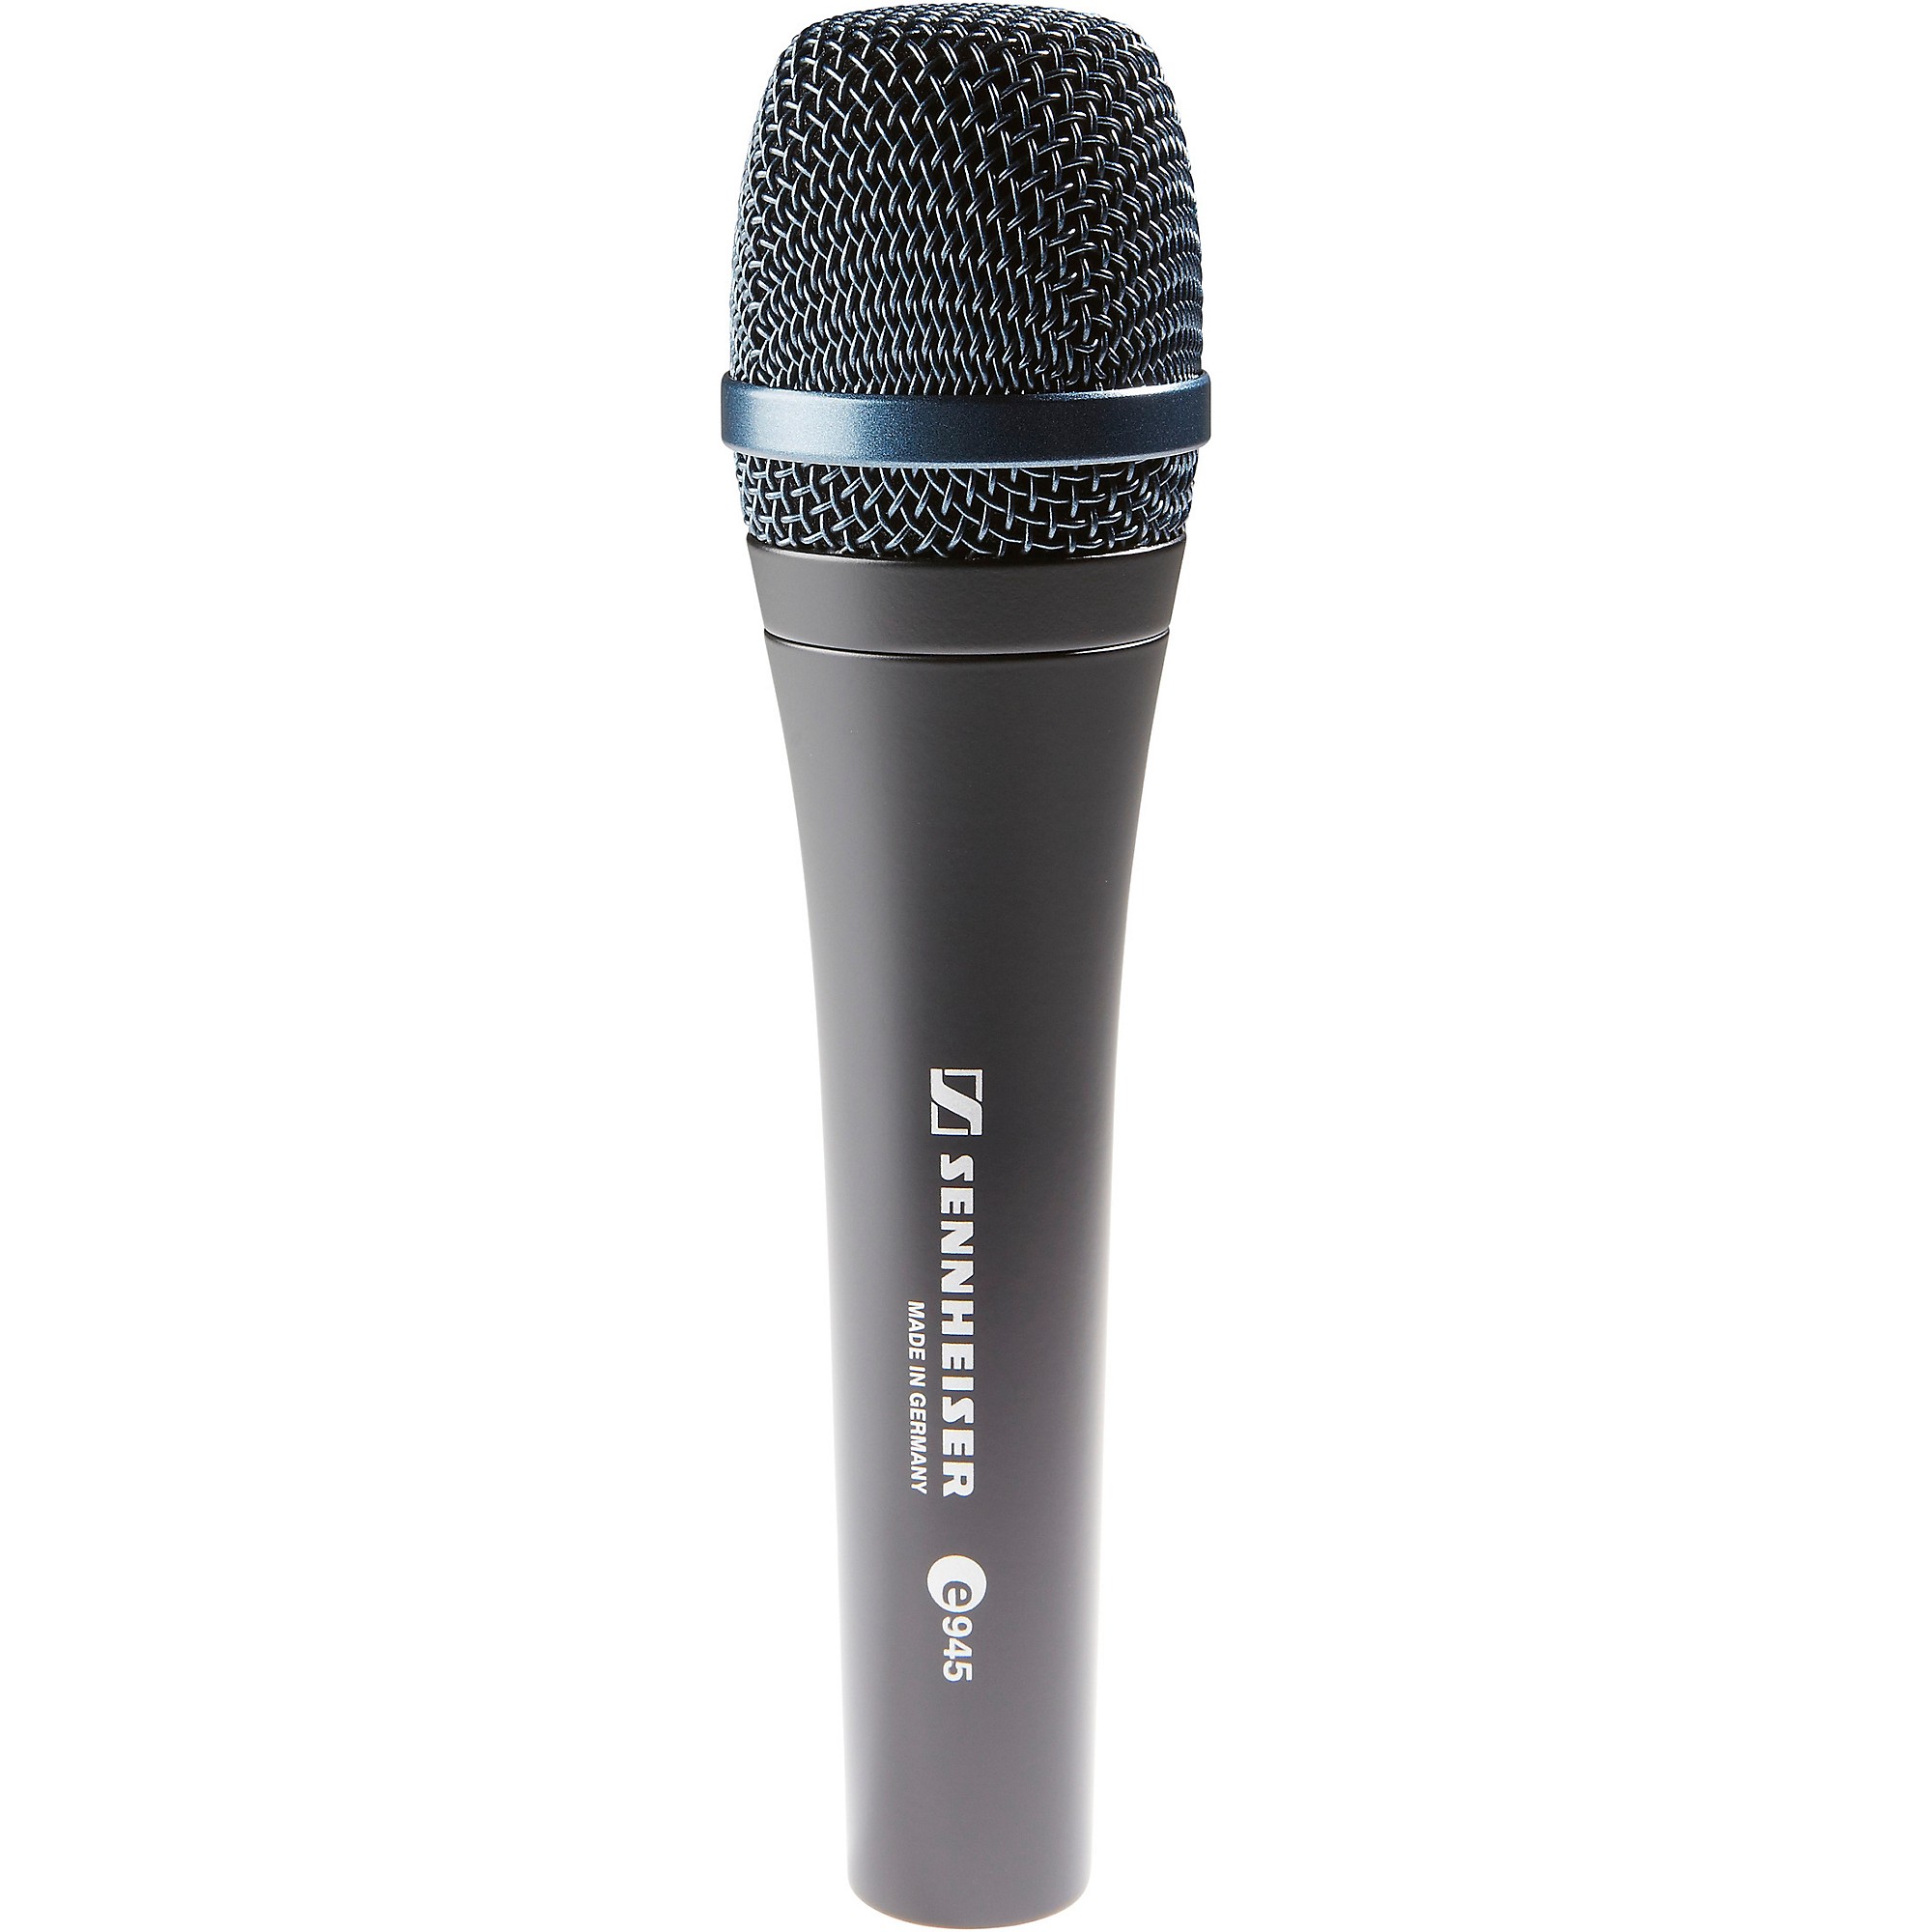 Sennheiser E945 Supercardioid Dynamic Microphone